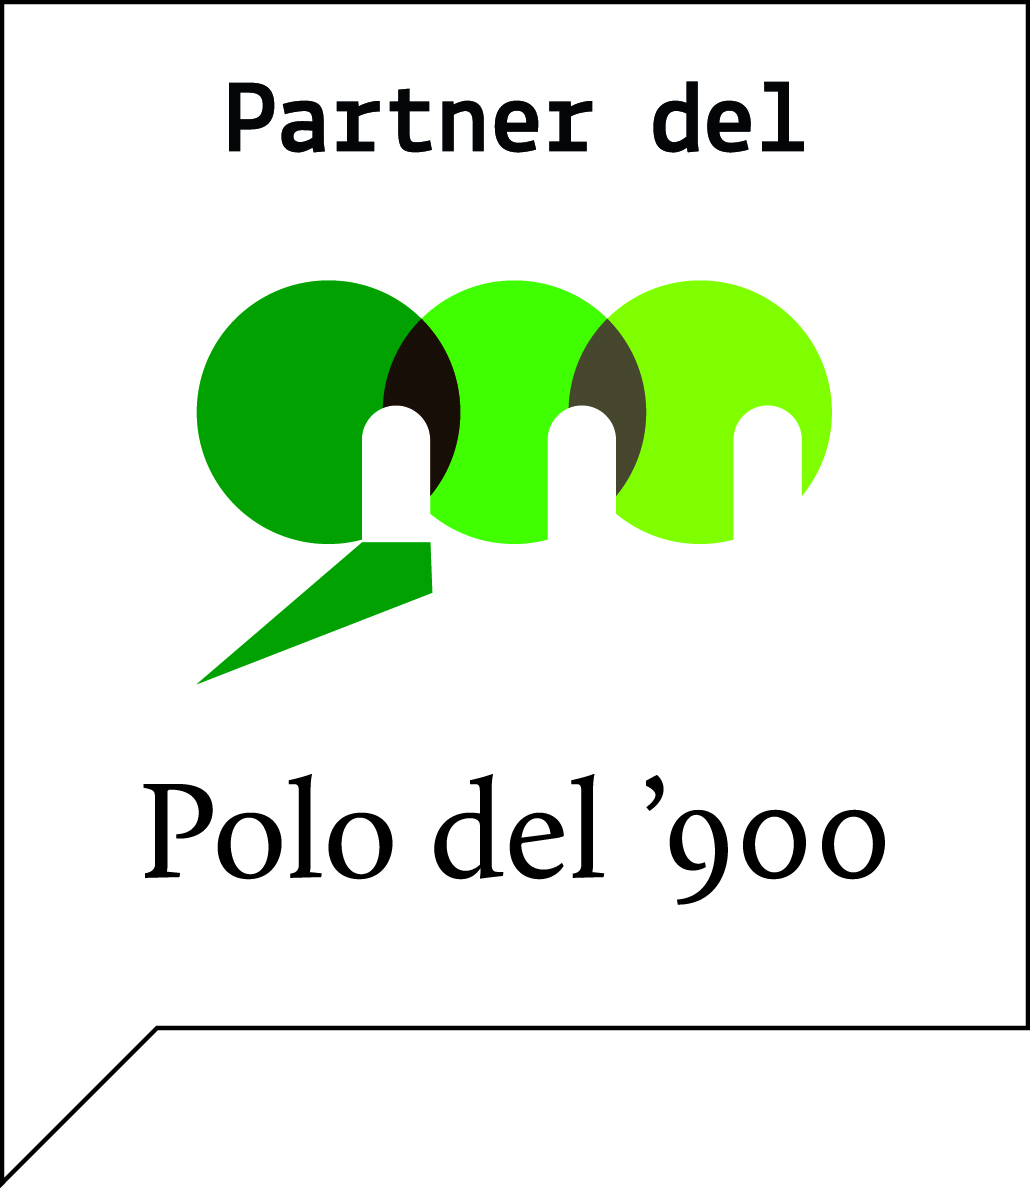 04 01 Polo del 900 Piedino logo 1